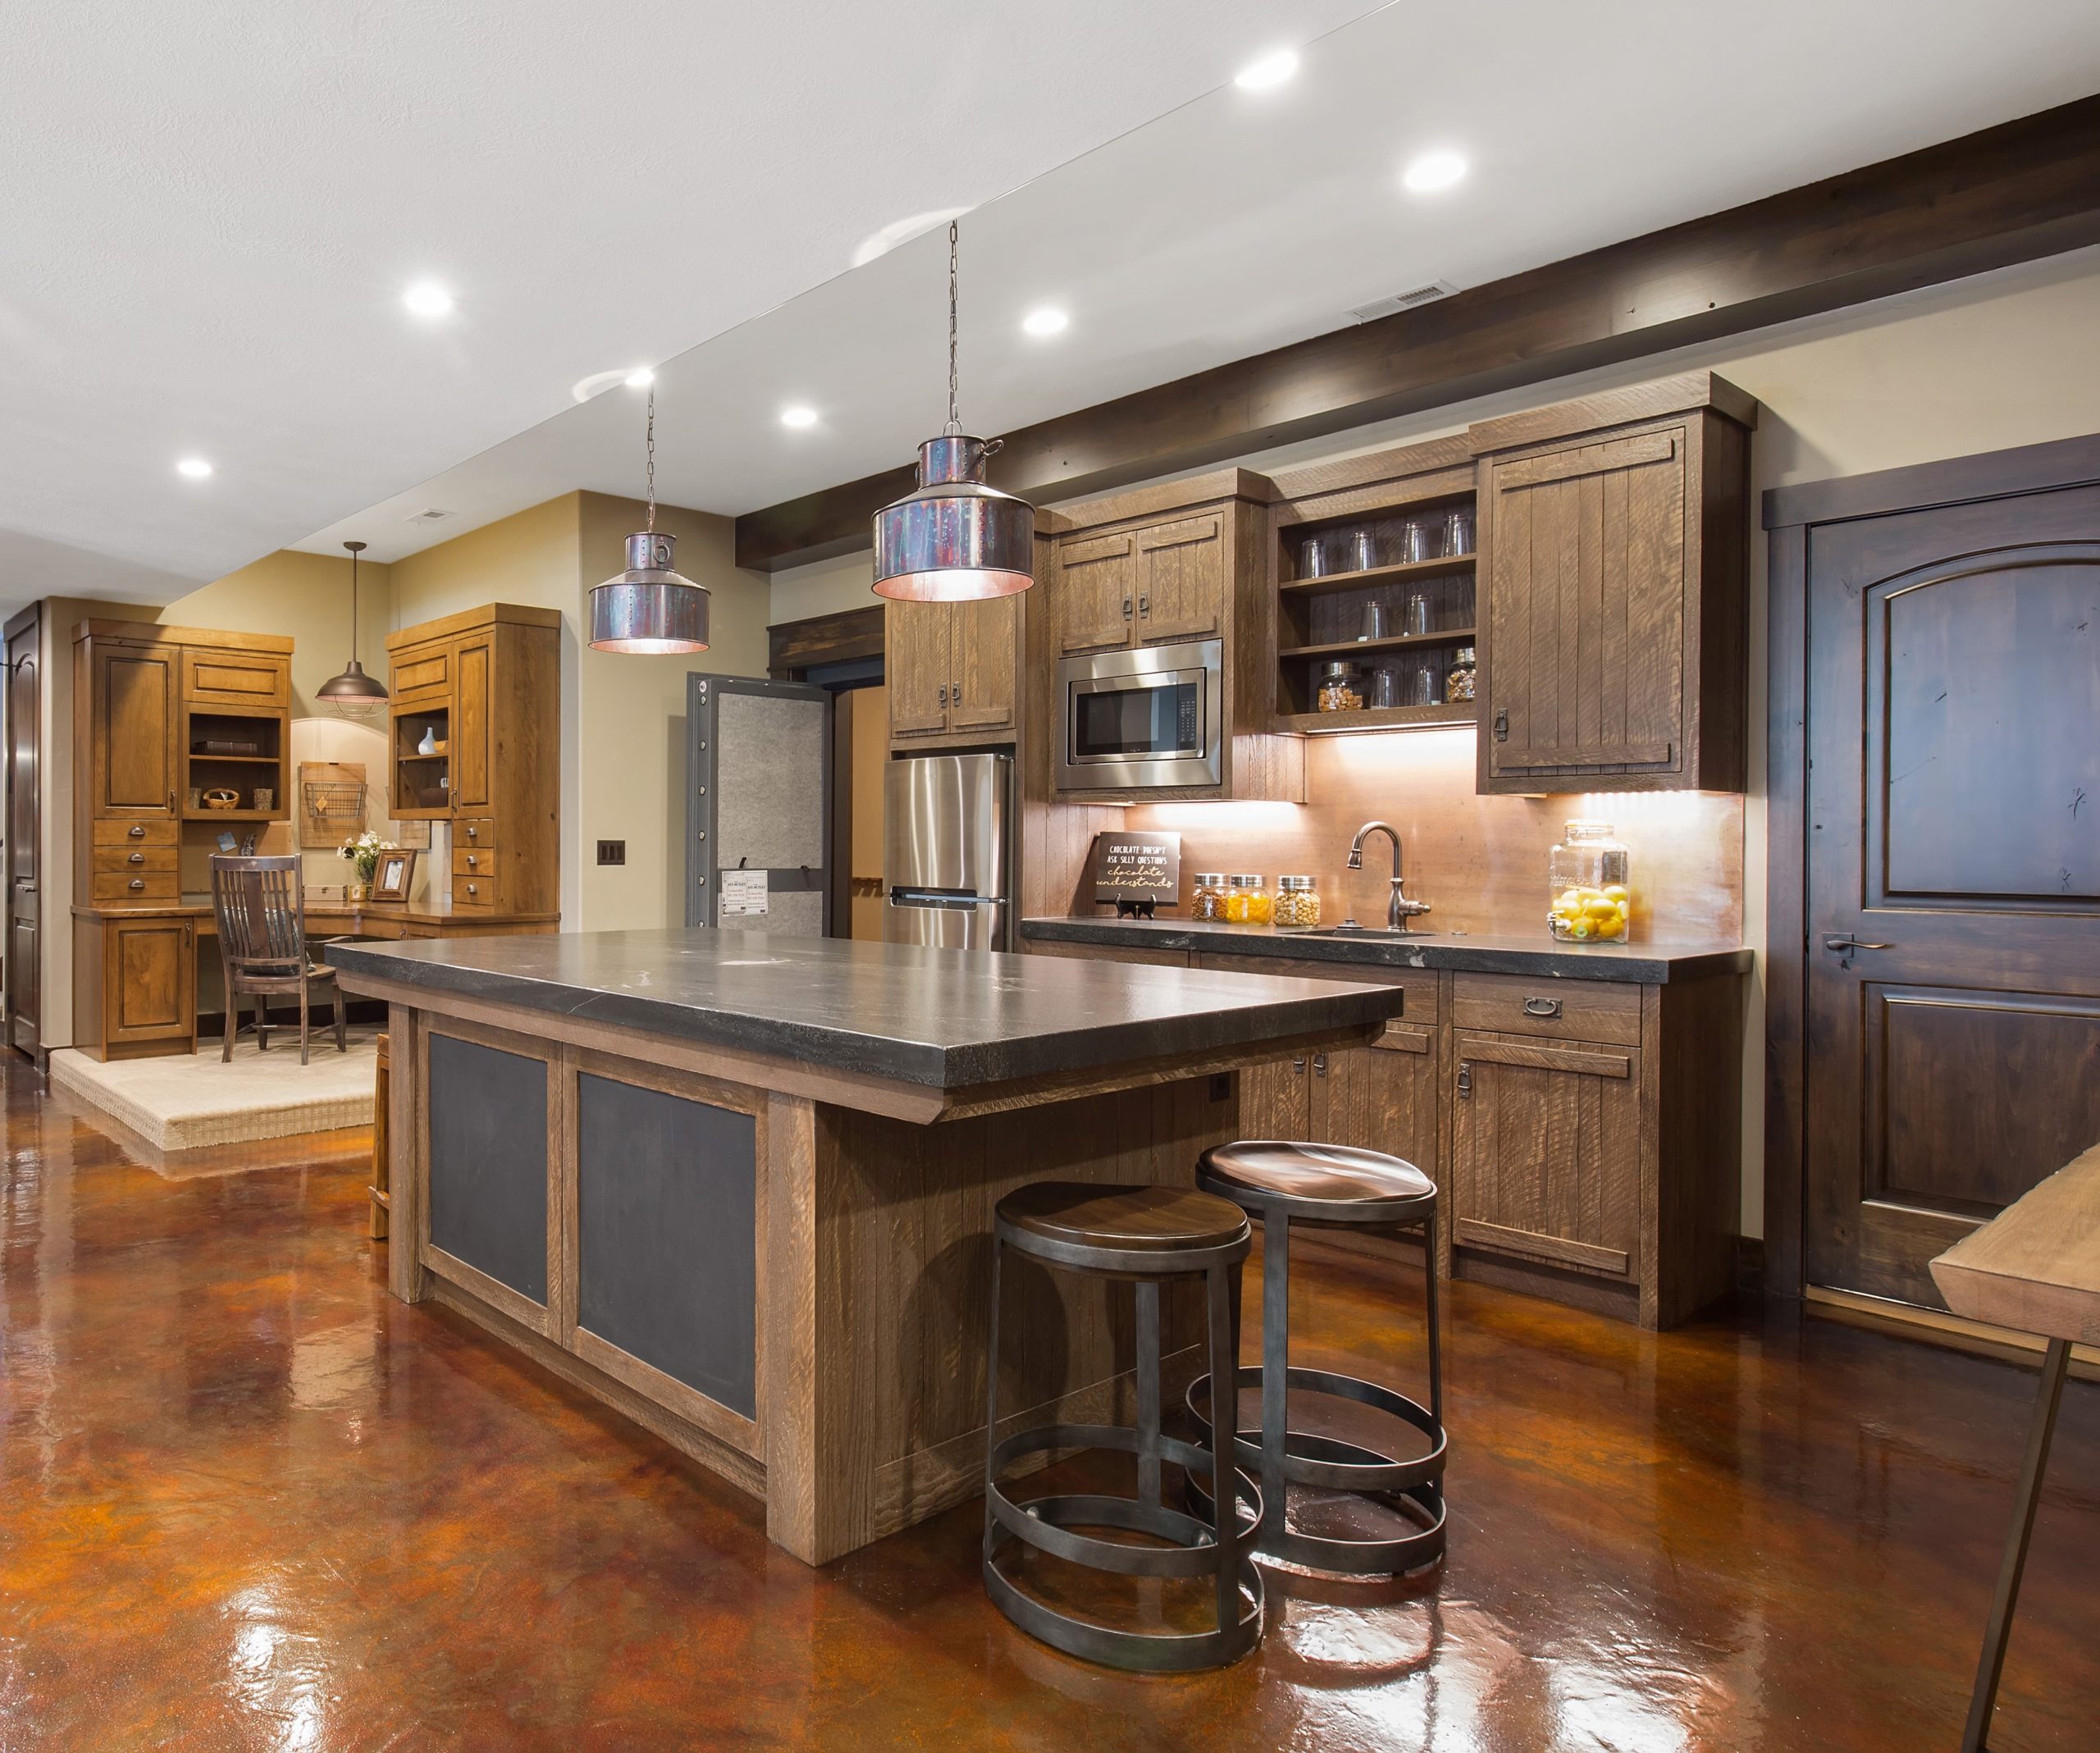 Basement kitchen with epoxy floor